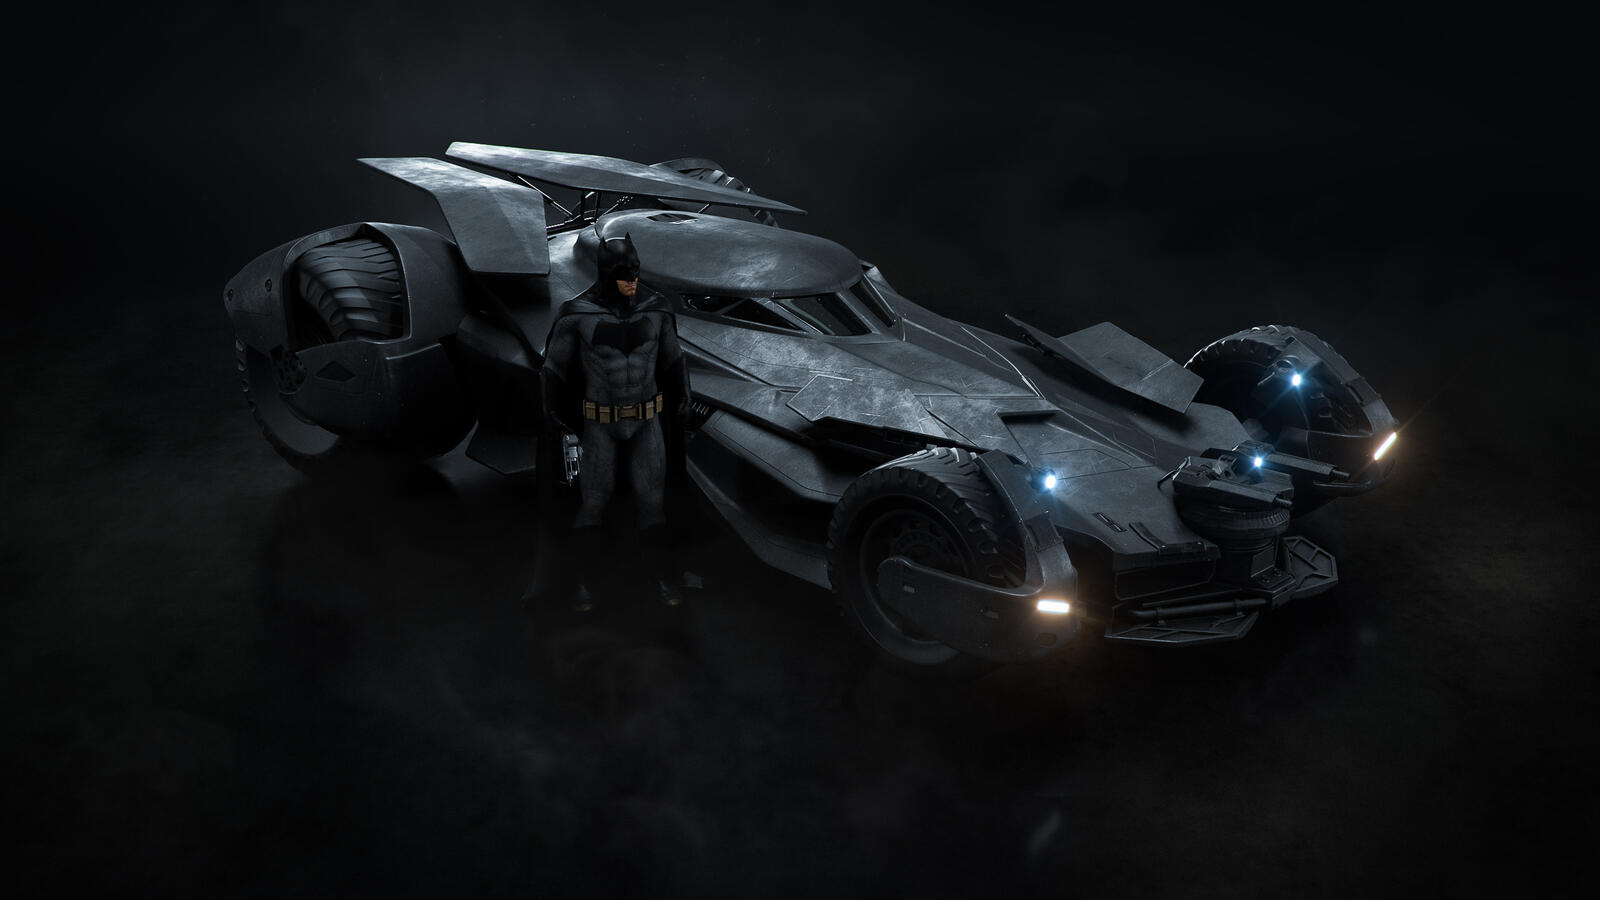 Free photo Batmobile on a dark background